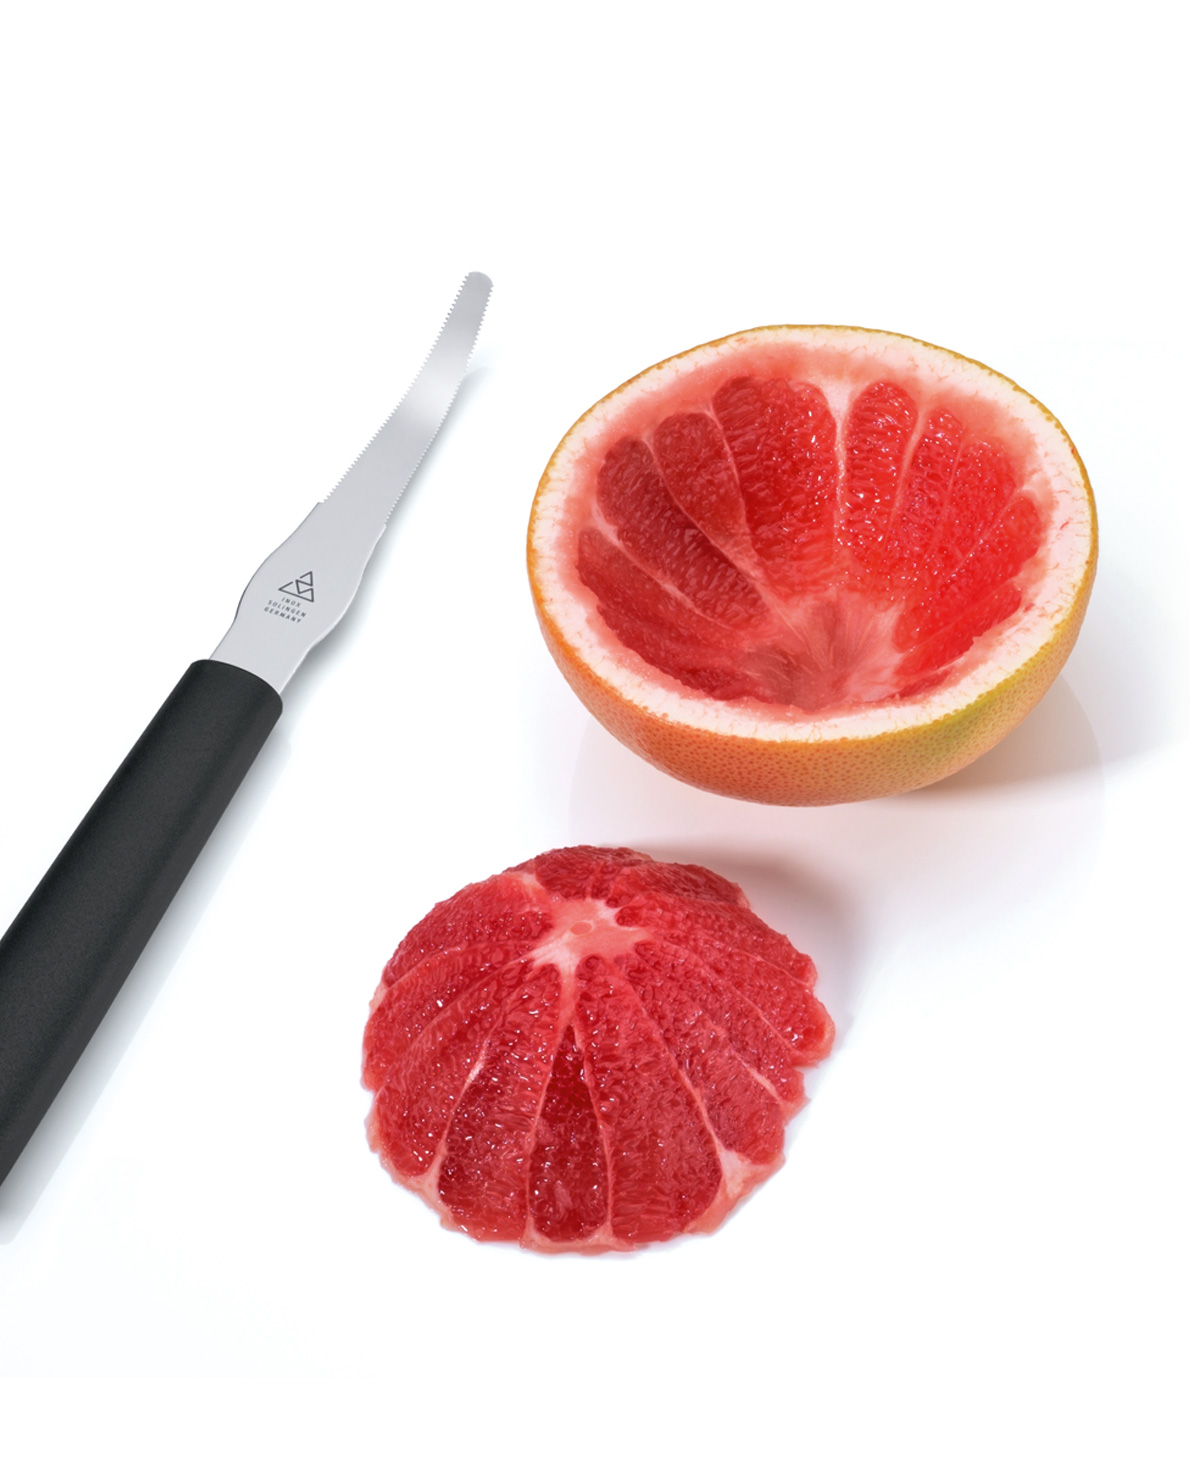 Grapefruit knife